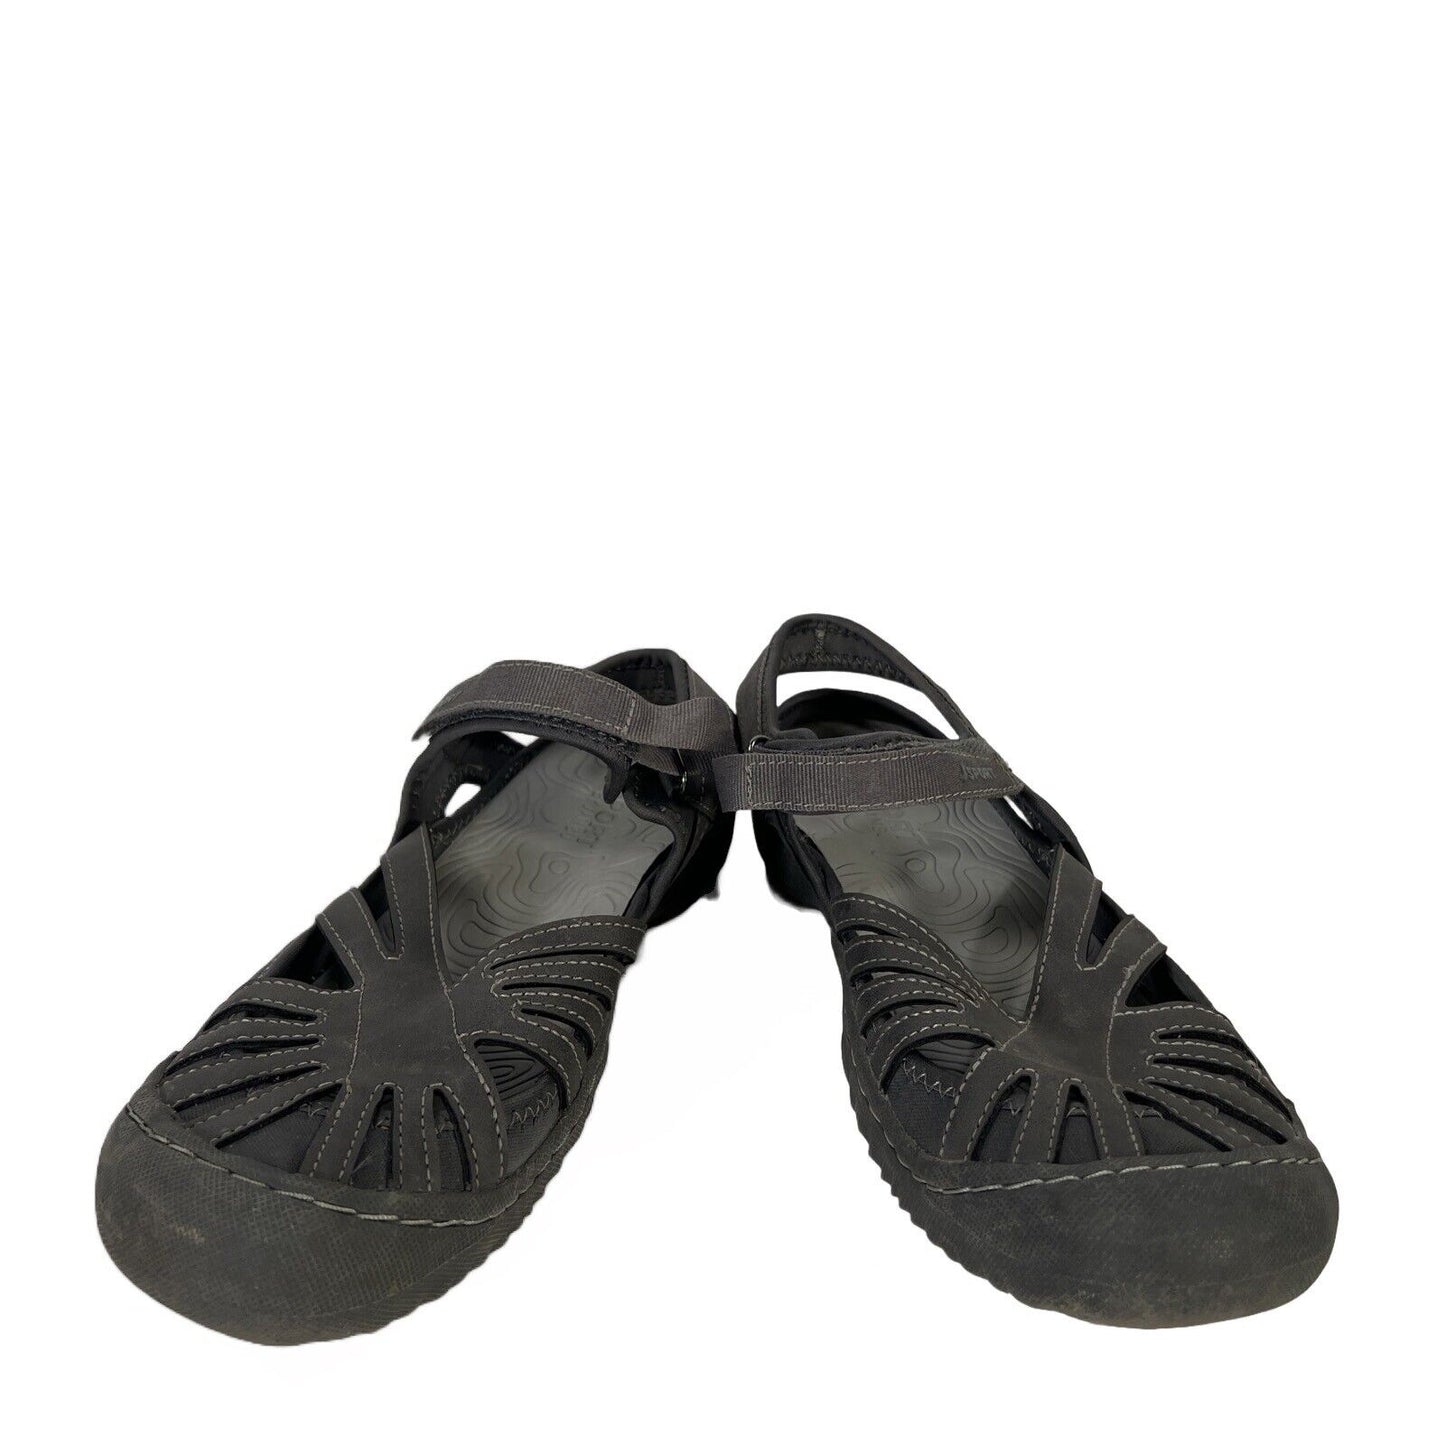 J Sport by Jambu Women's Gray Ankle Strap Sport Sandals - 9